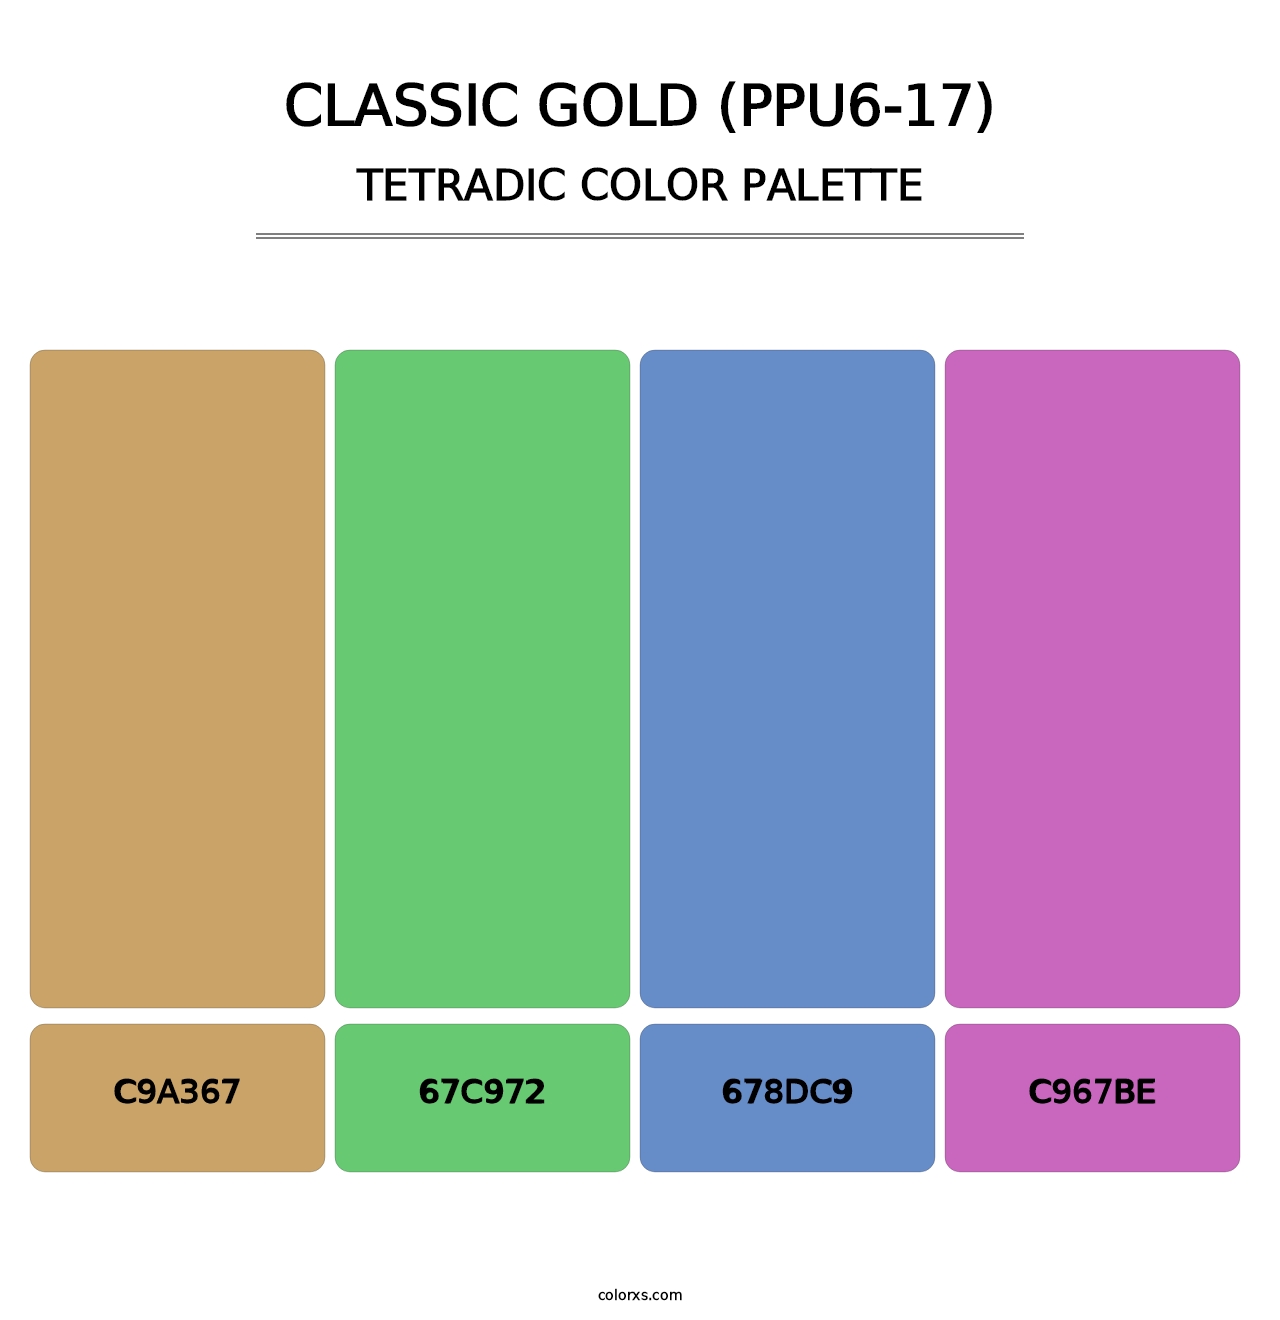 Classic Gold (PPU6-17) - Tetradic Color Palette